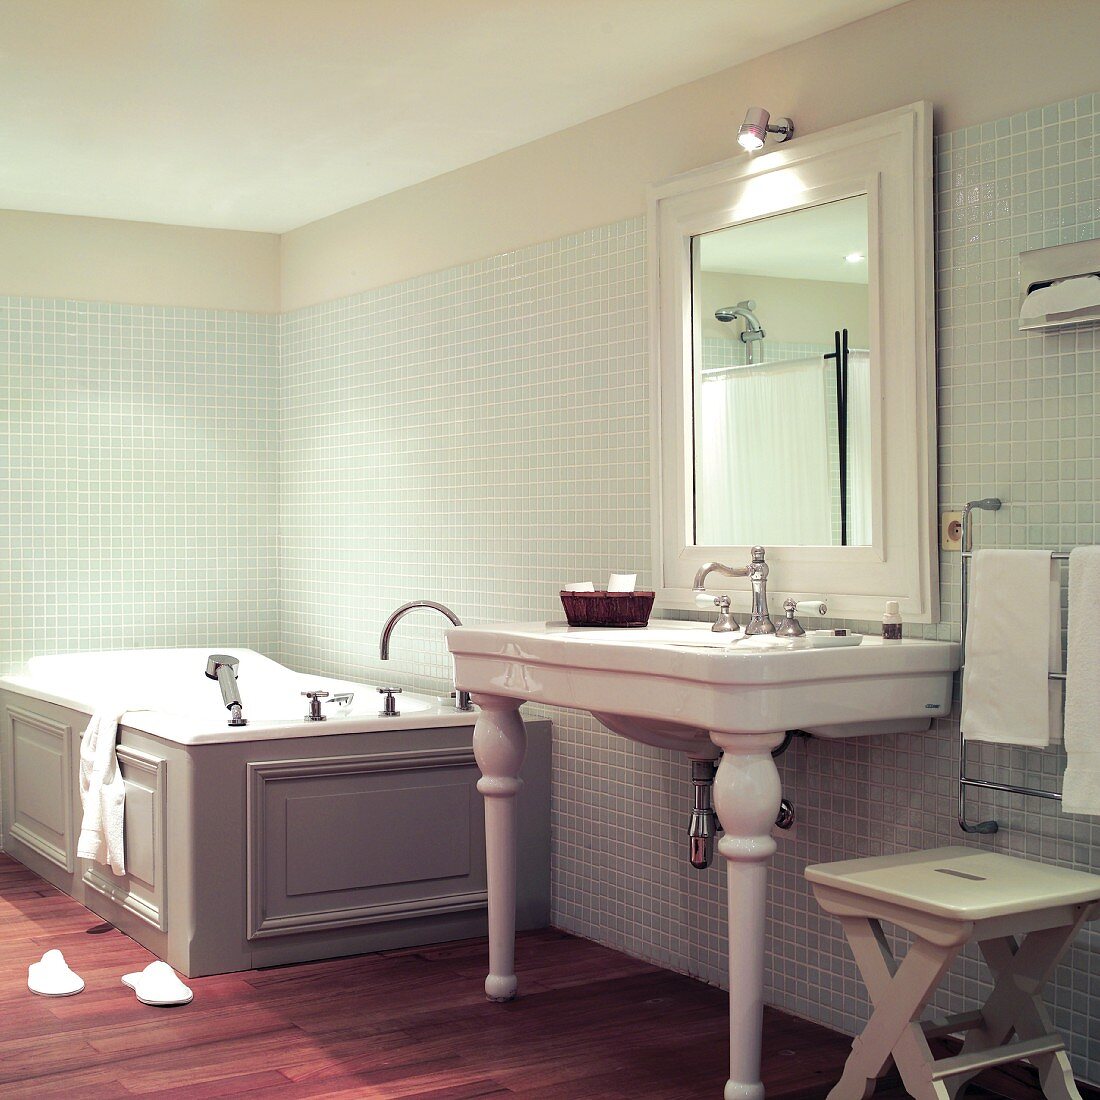 Vintage bathroom: washstand with ceramic legs next to wood-clad bathtub against mosaic-tiled walls